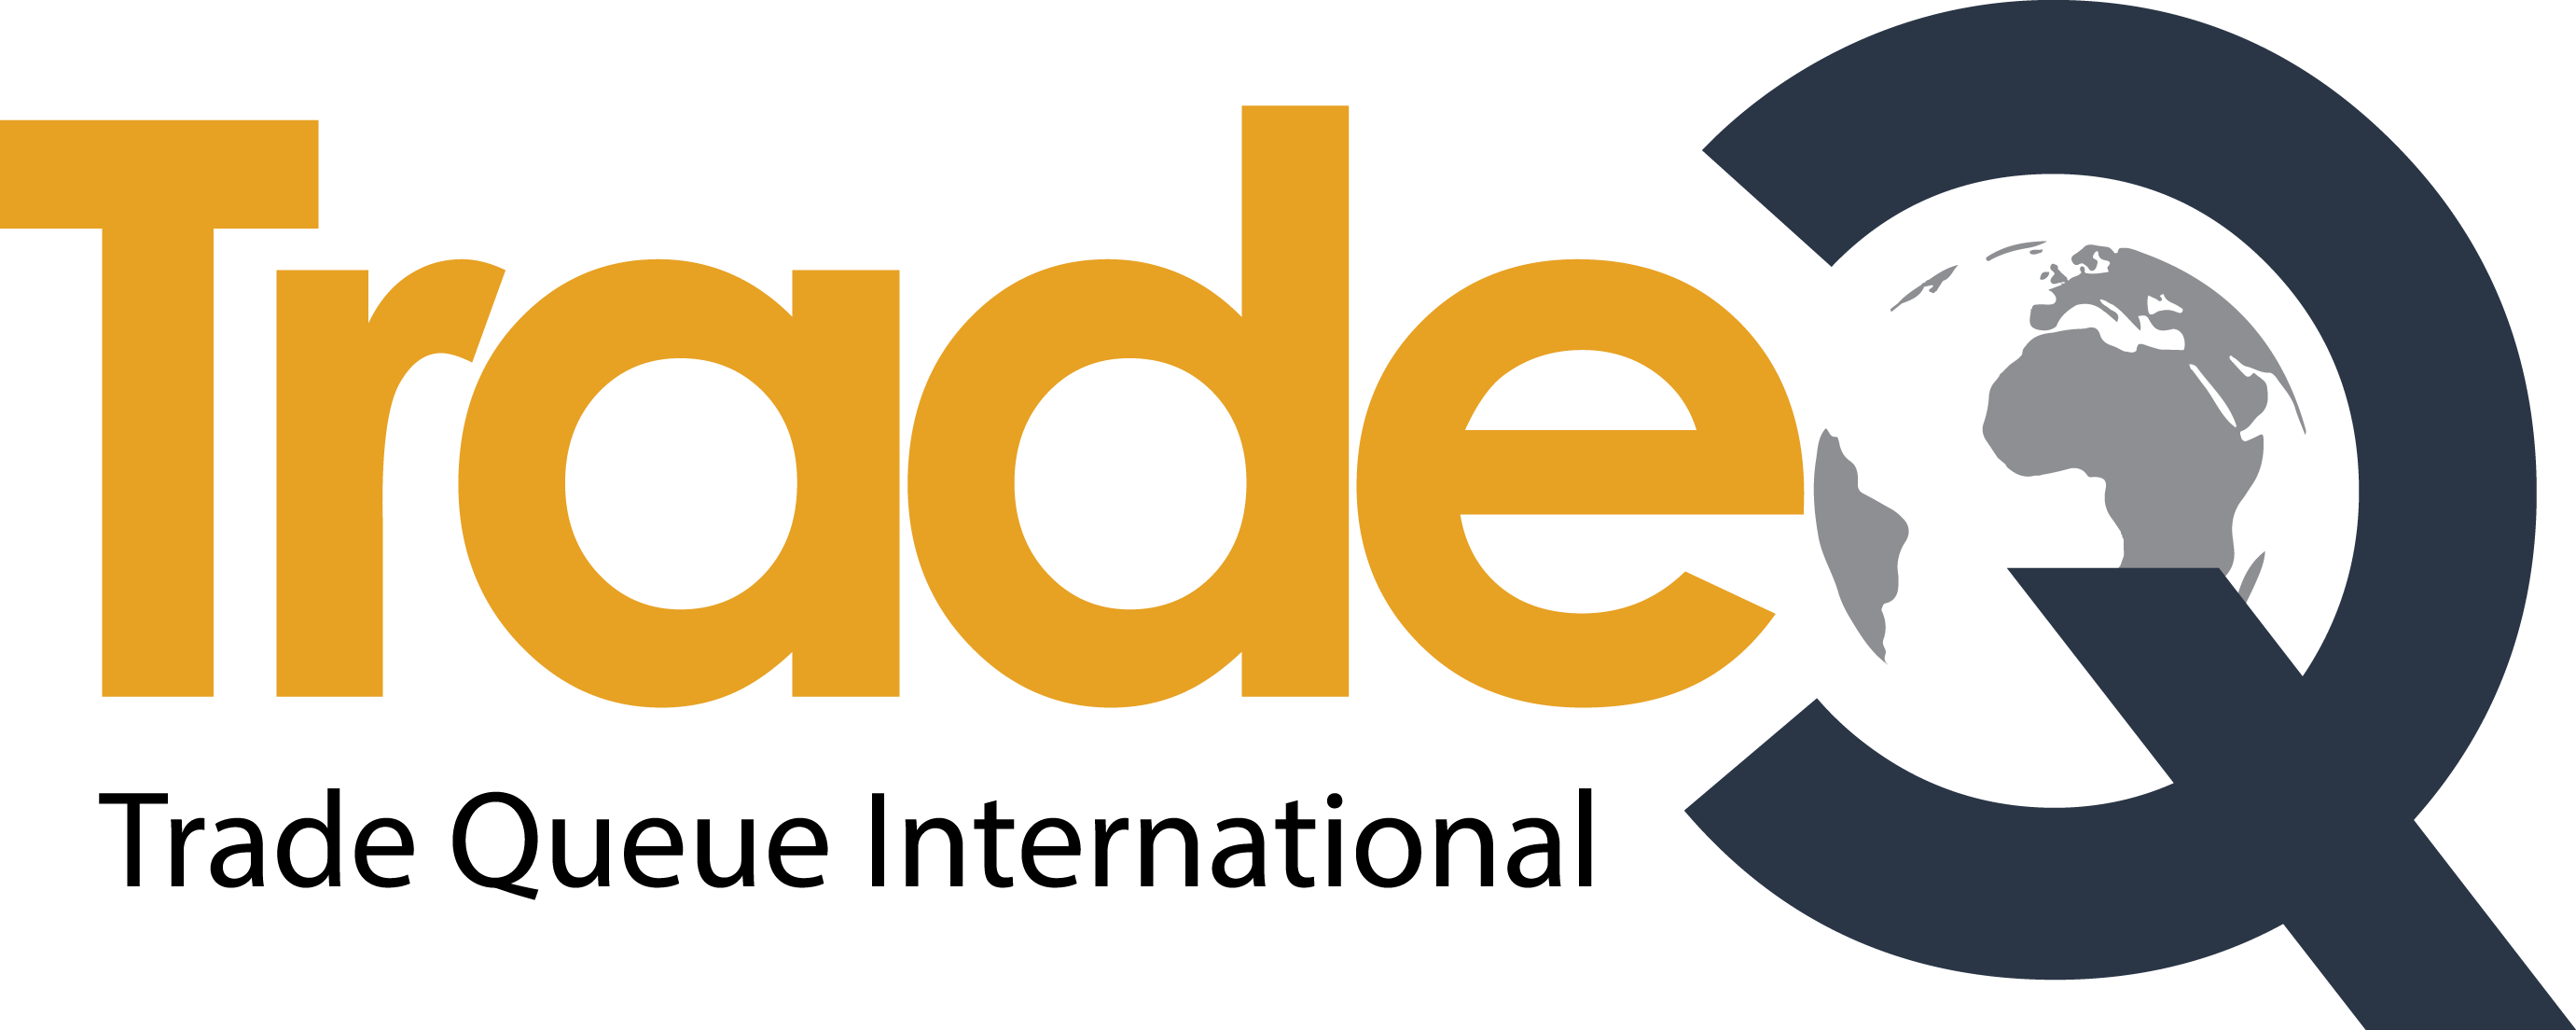 Trade Queue International Logo